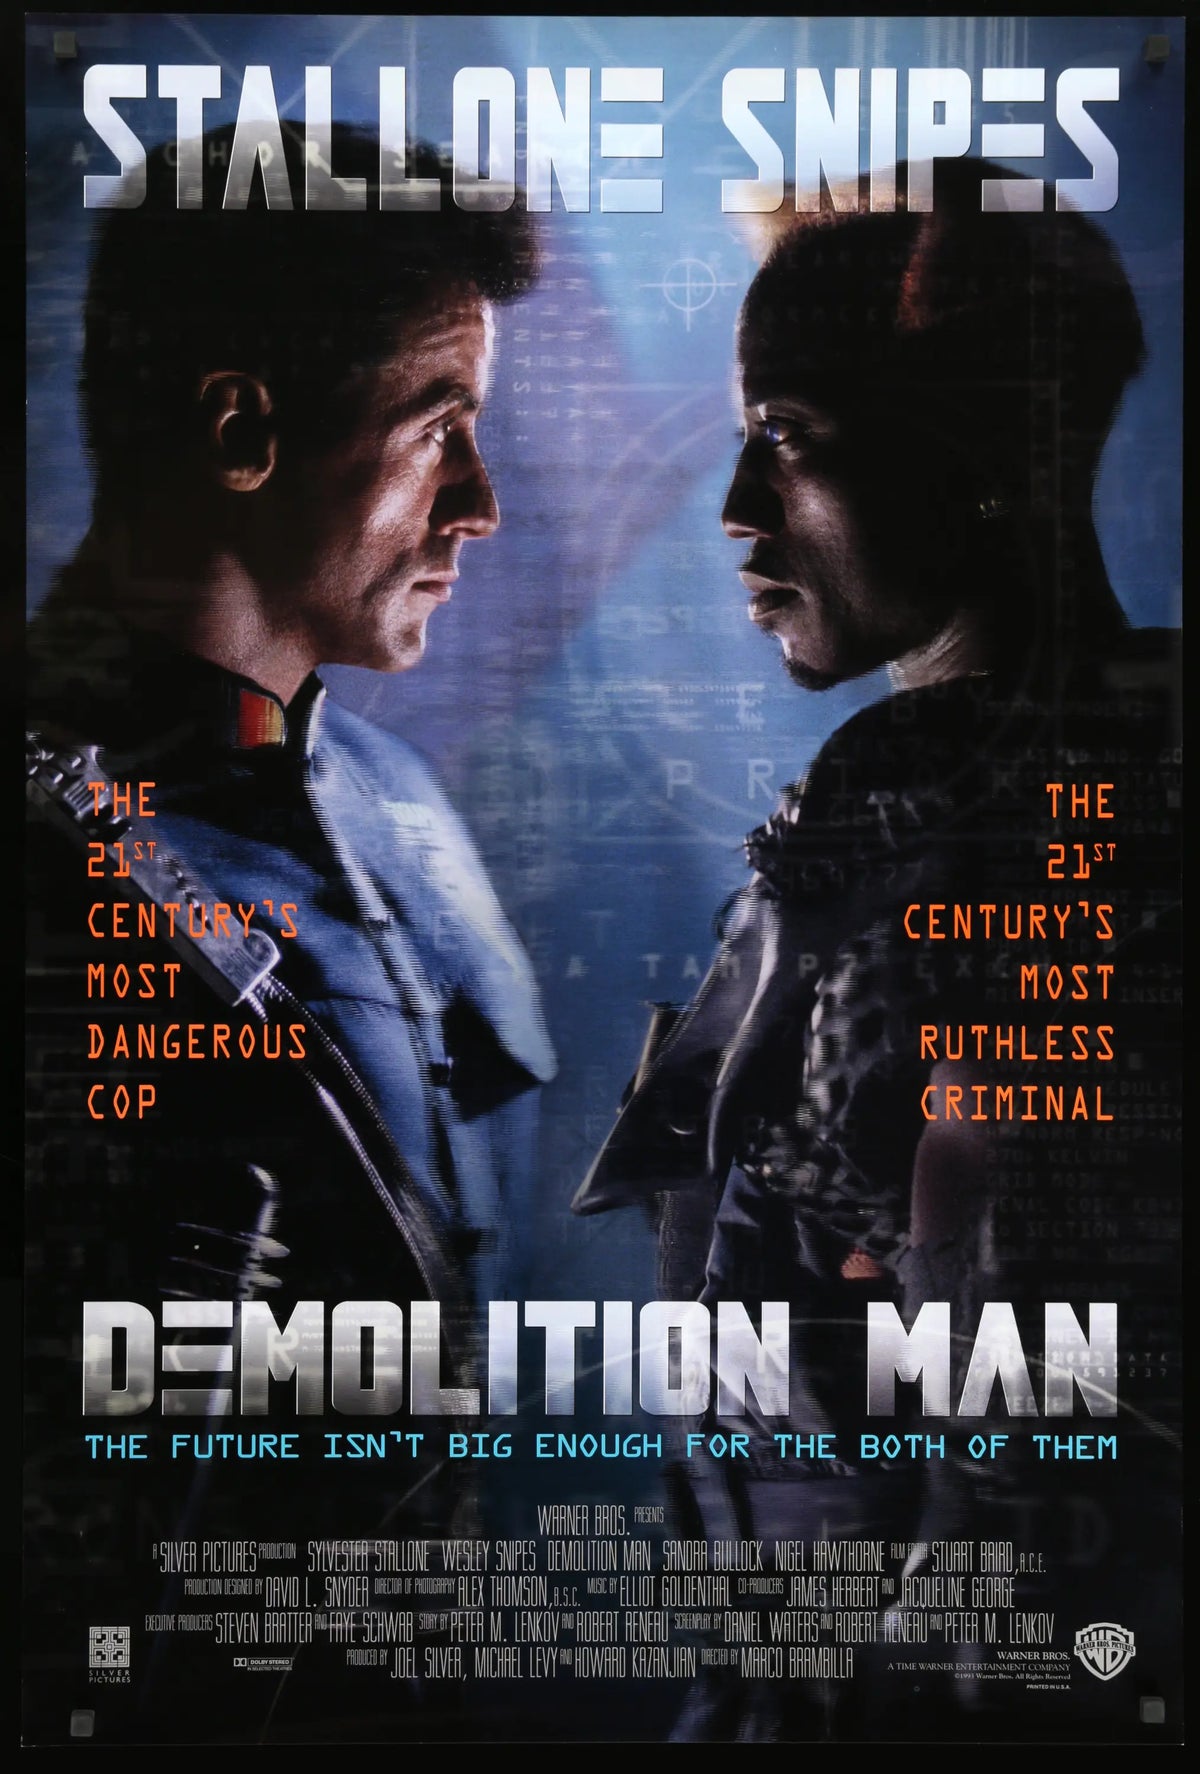 Demolition Man (1993) original movie poster for sale at Original Film Art